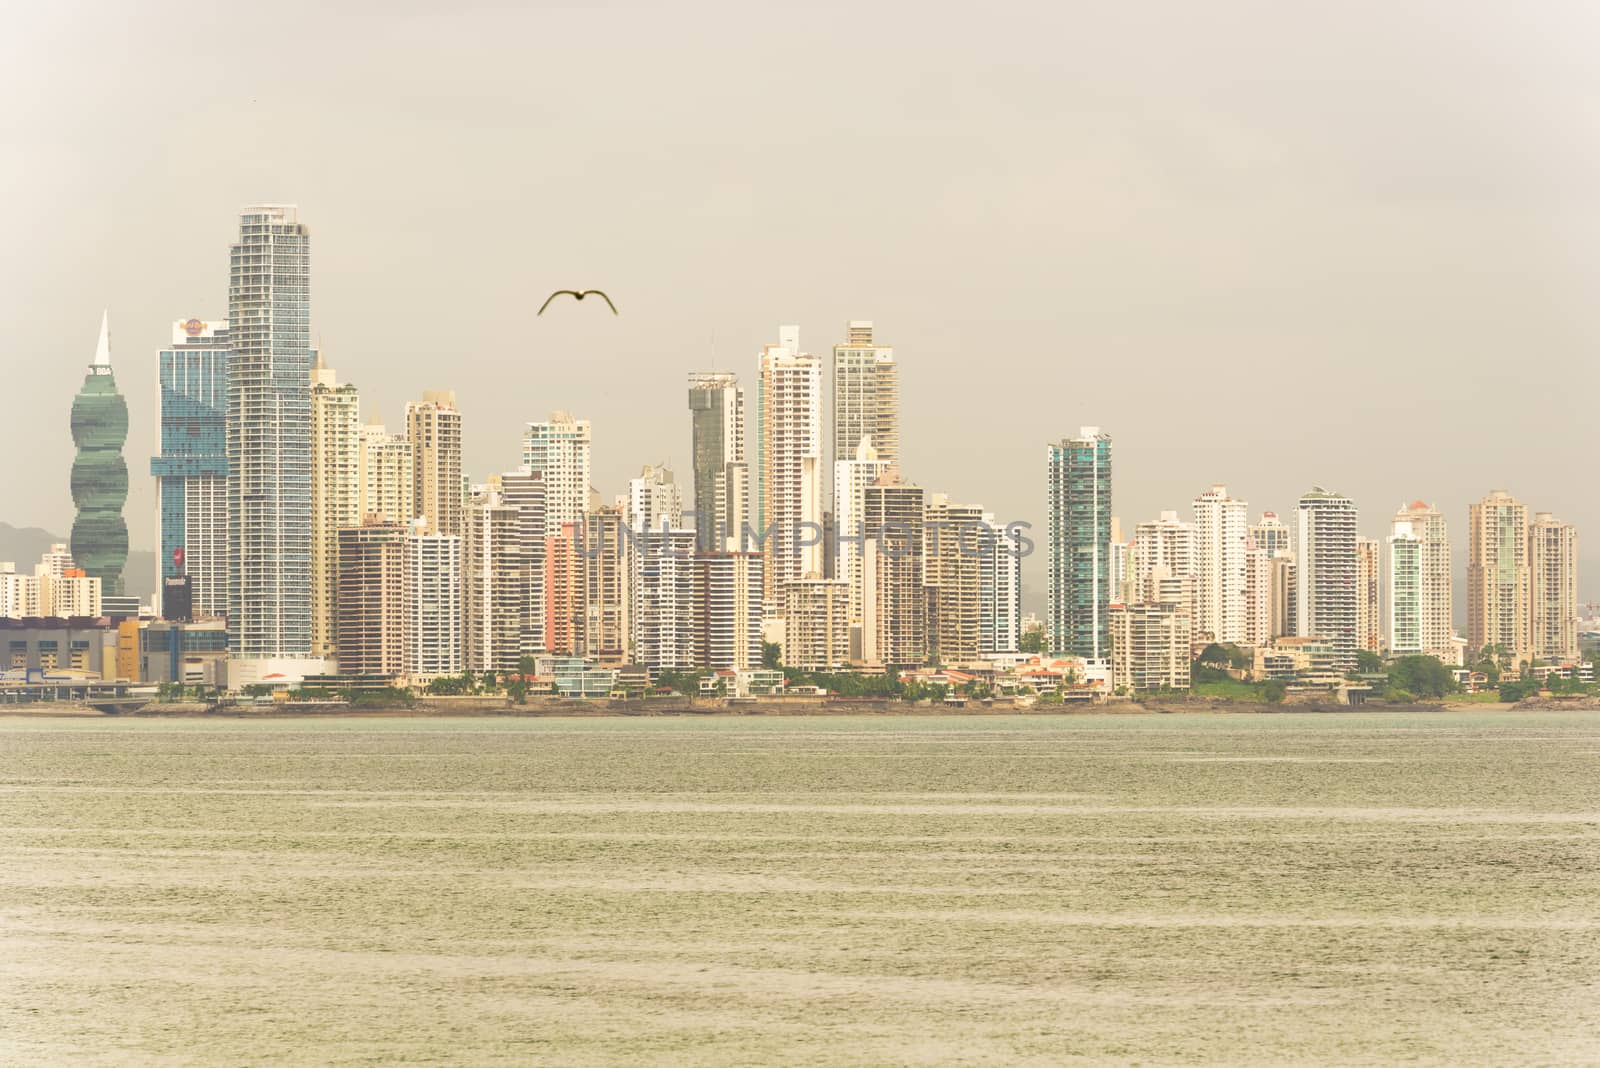 Panama city, Panama - January 2, 2014: Panam City skyscrapers skyline, Panama financial distict, on sunny day in January 2014.